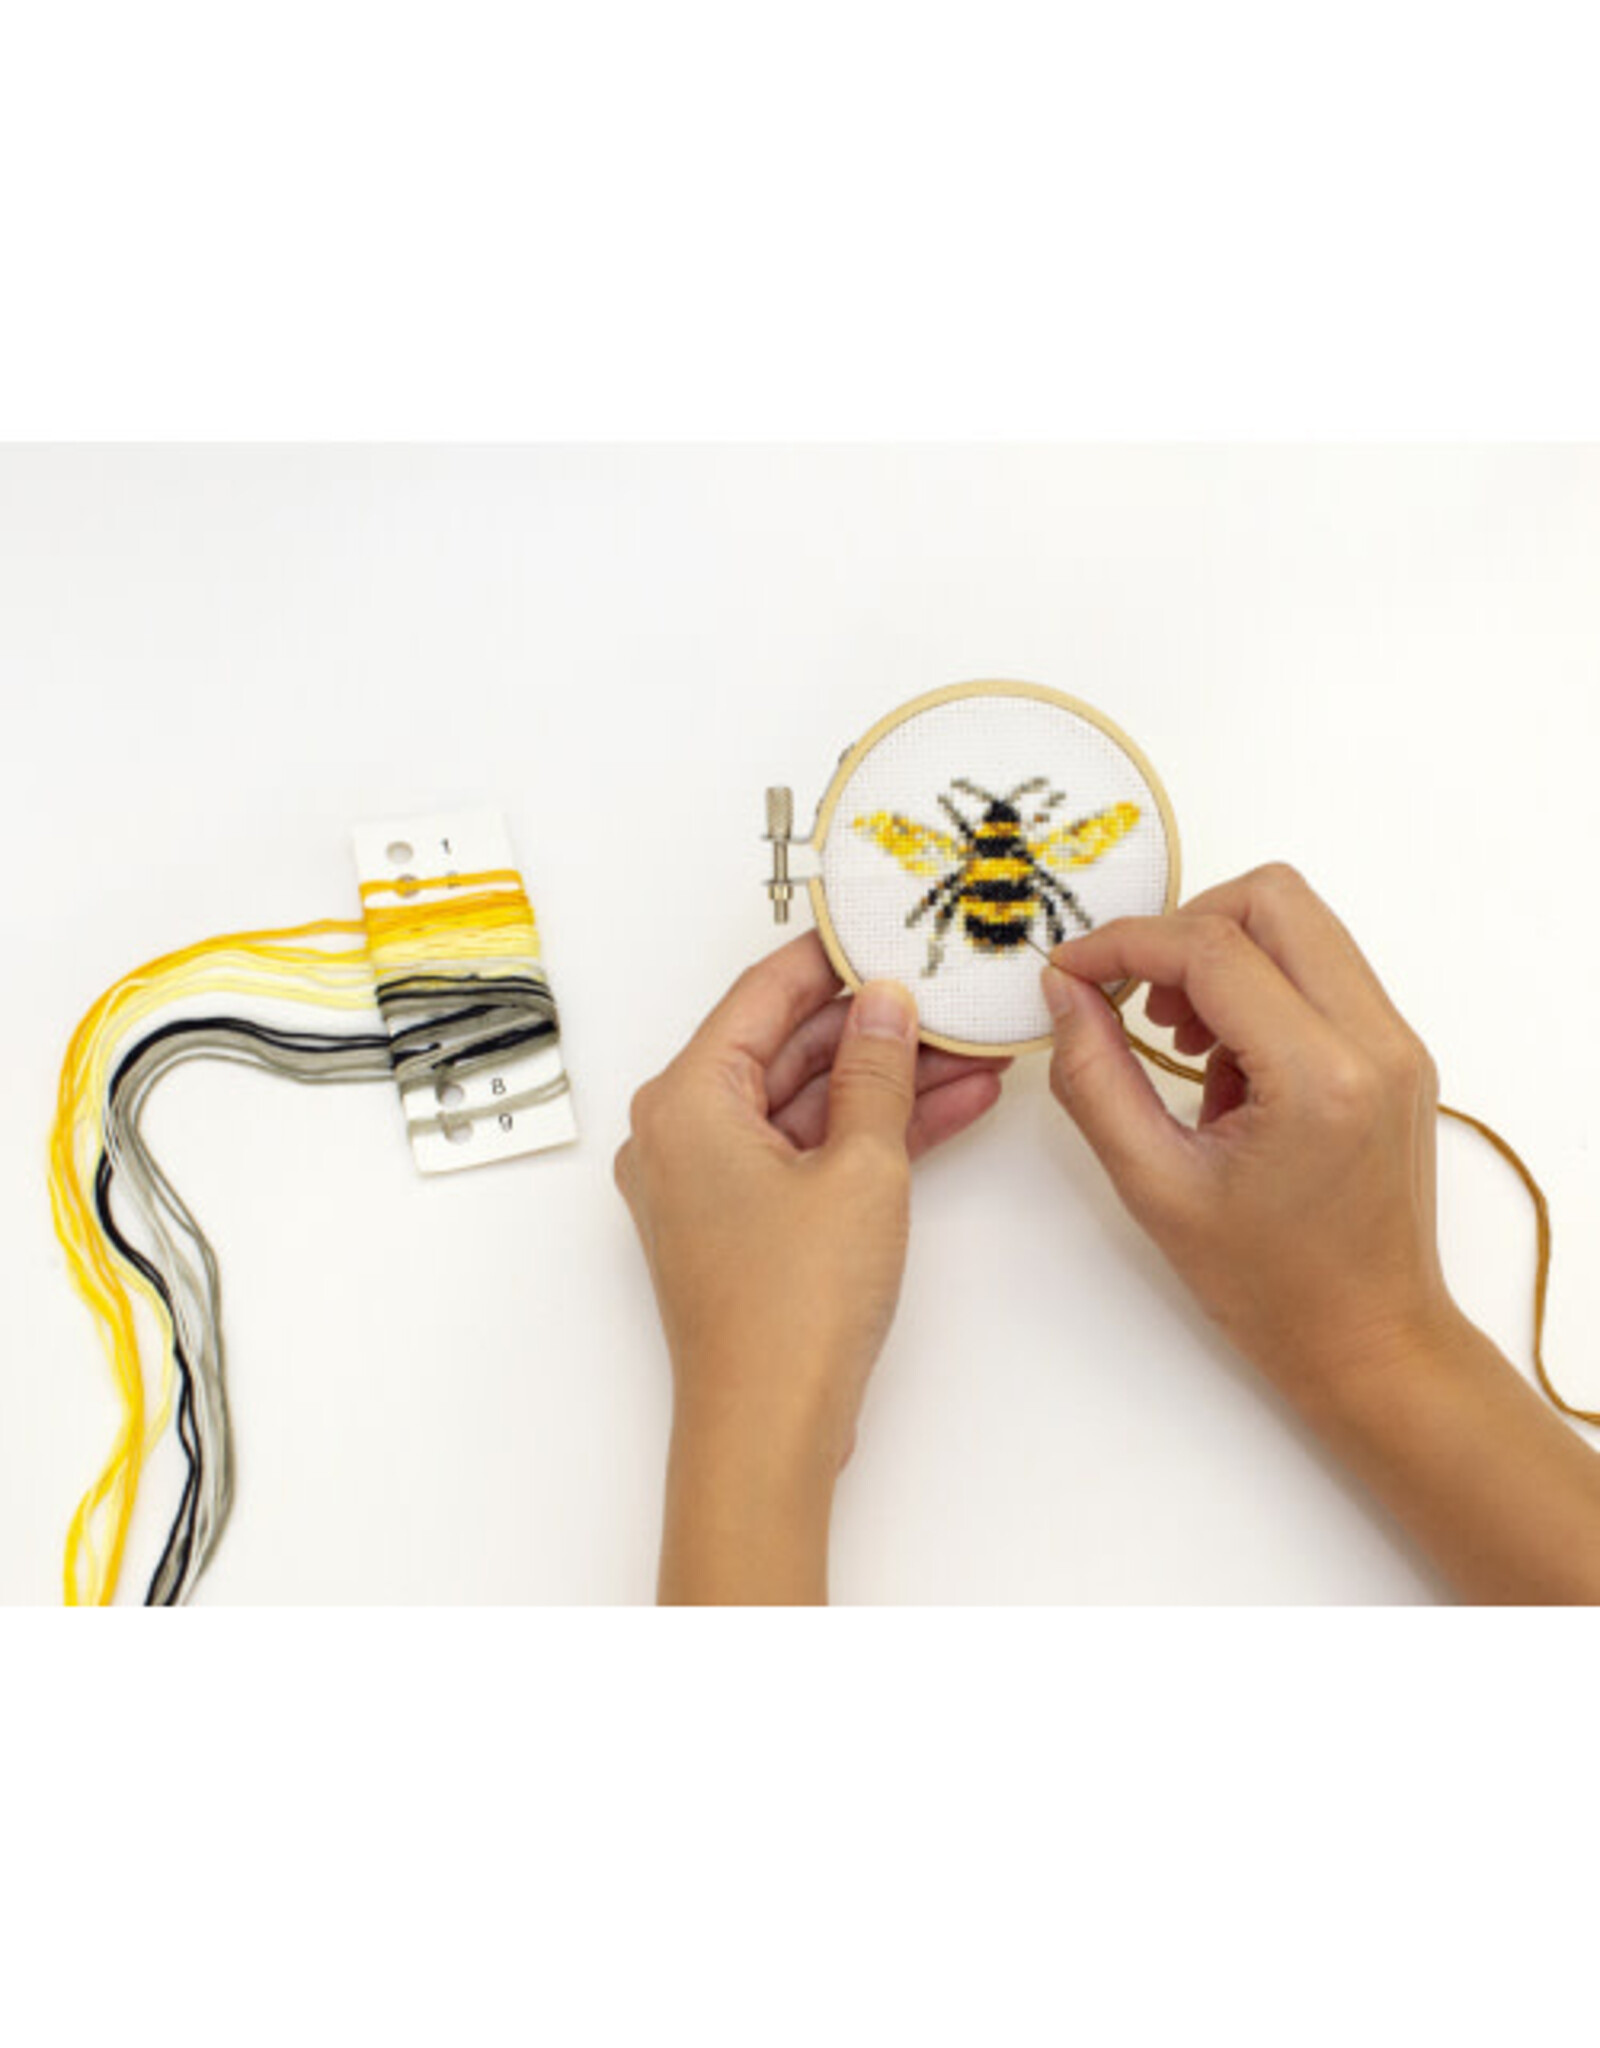 Mini Cross-Stitch Embroidery Kit - Bee